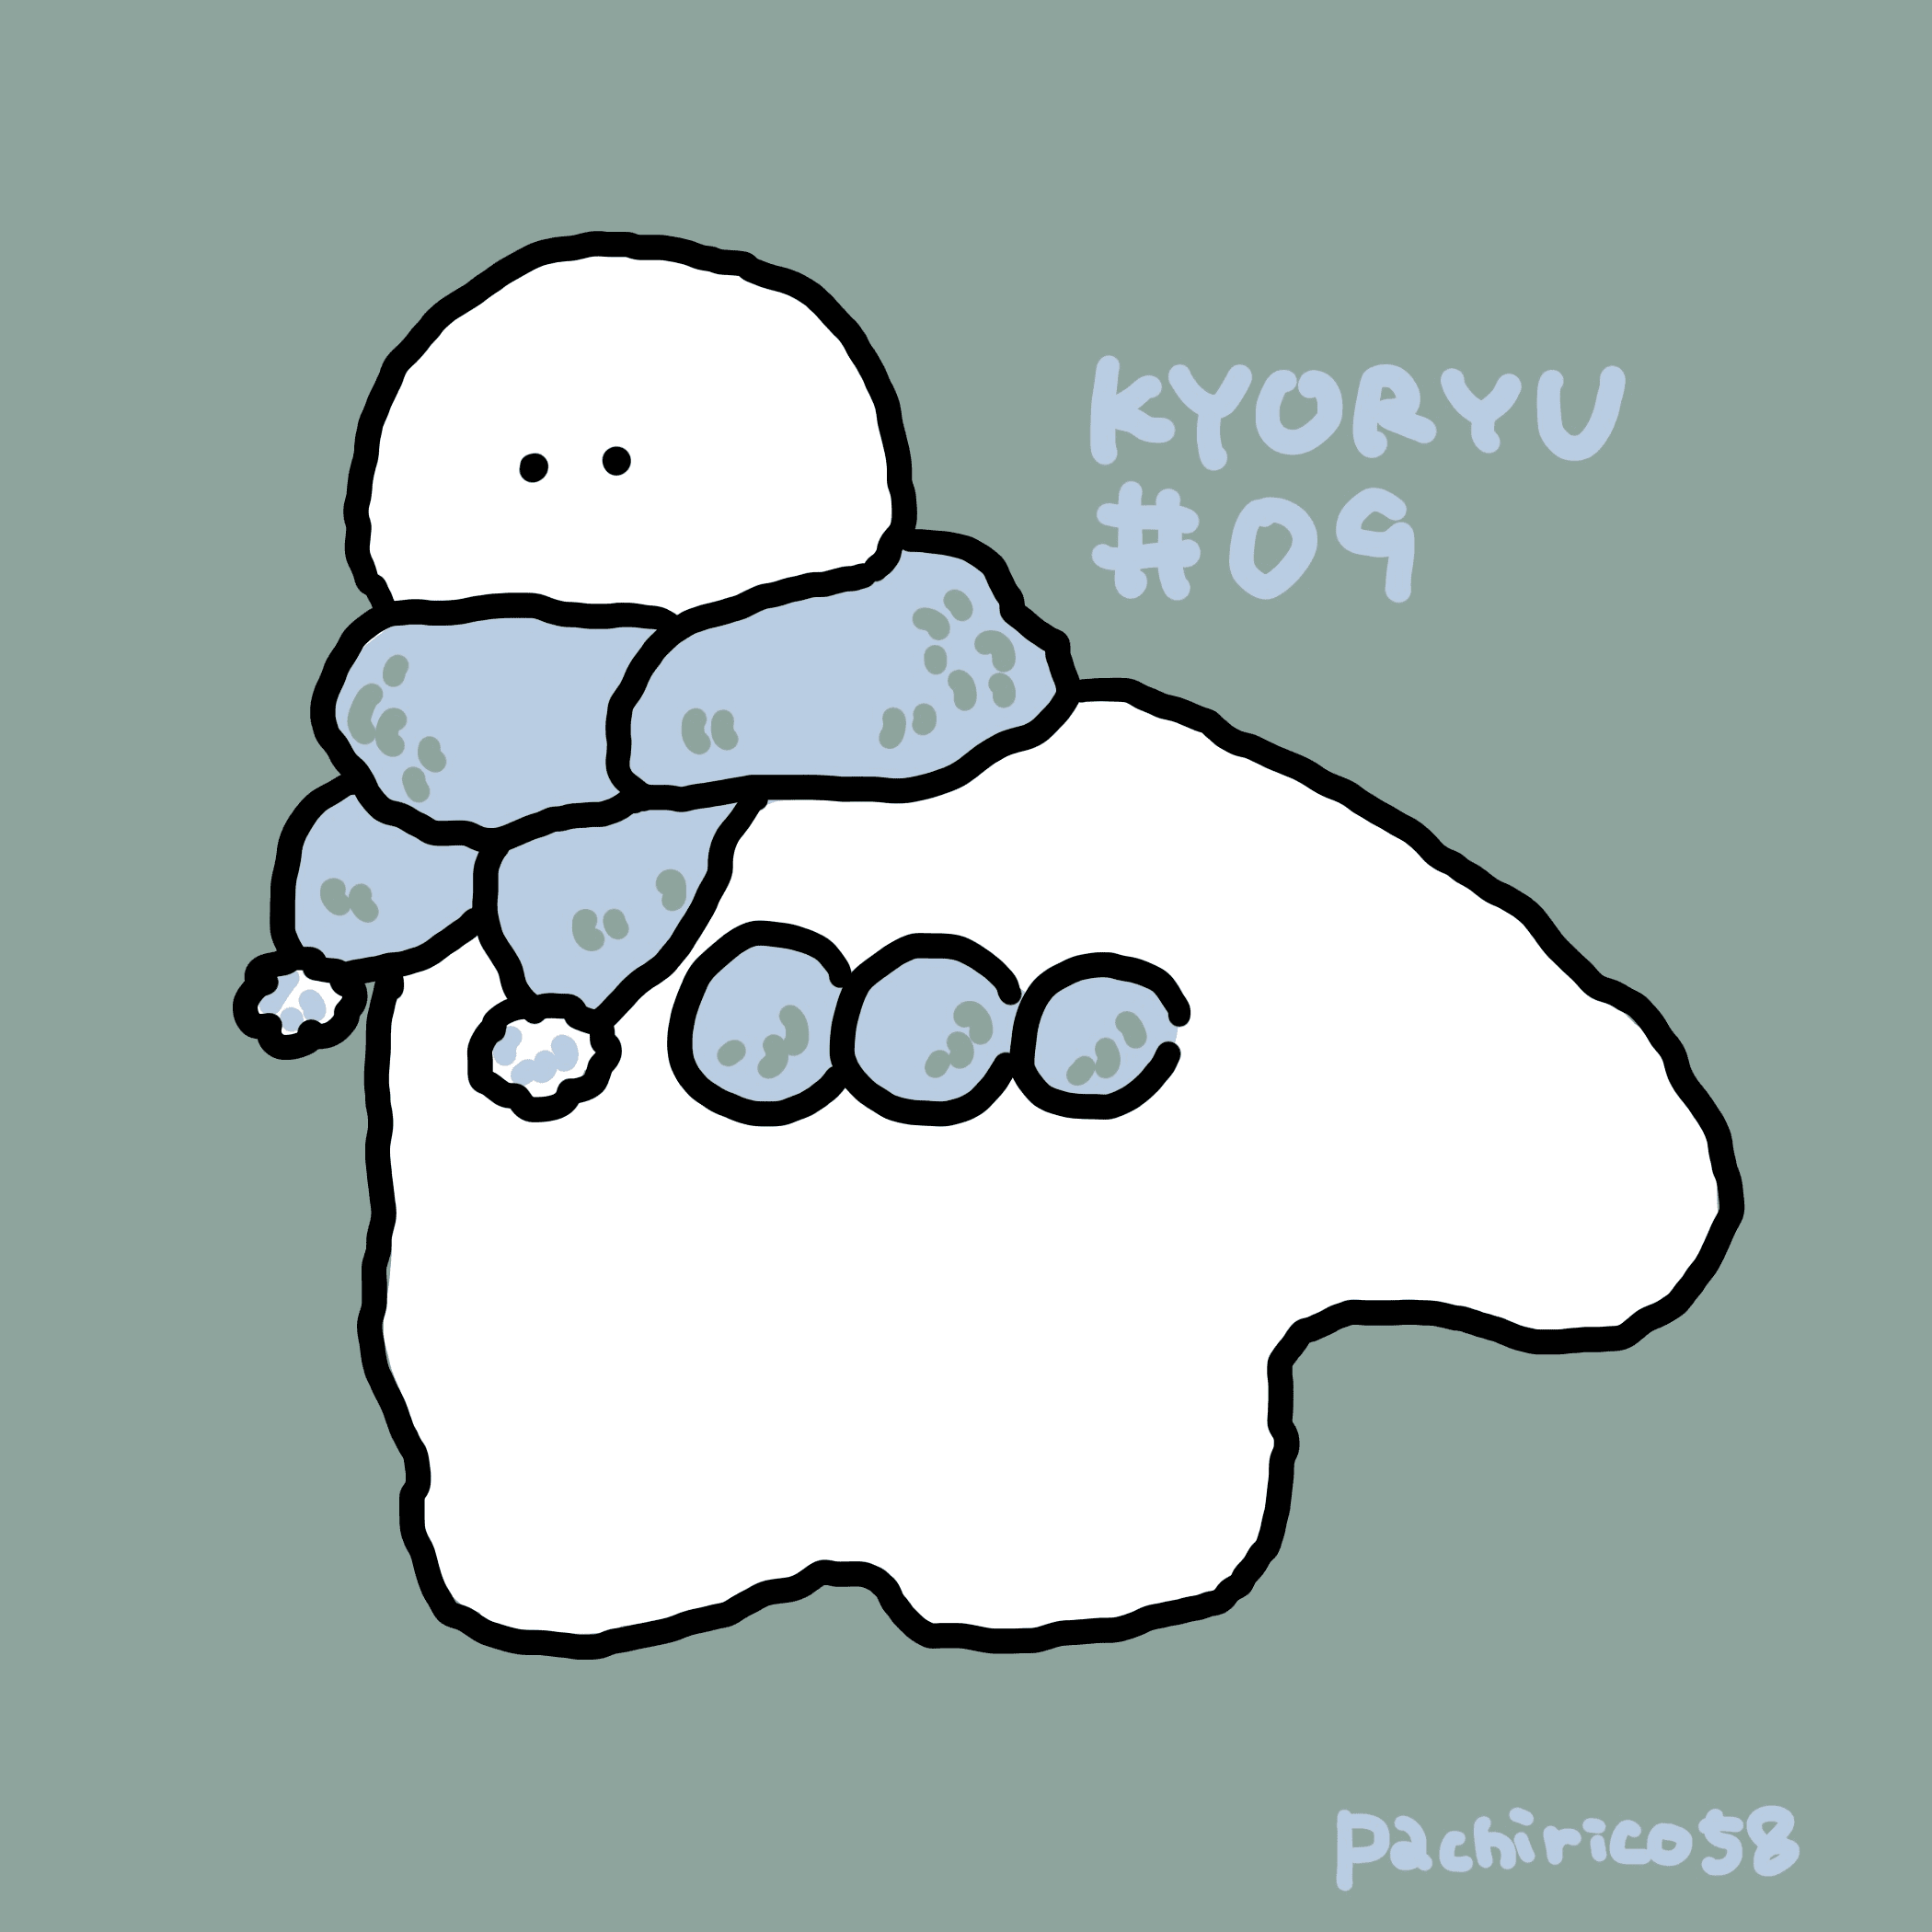 KYORYU#009